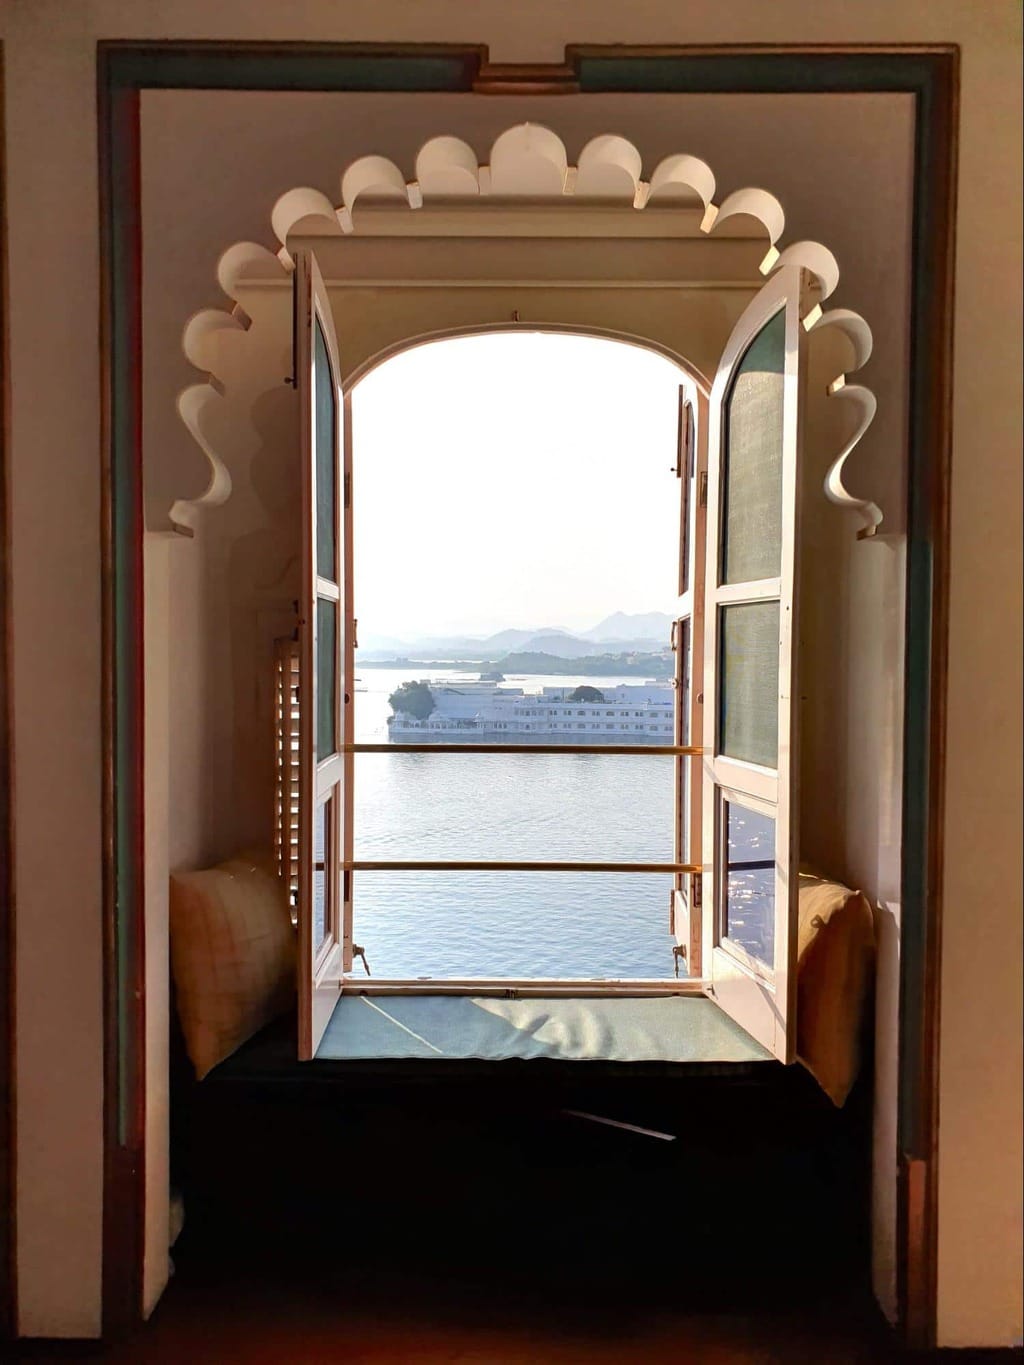 Window at the Durbar Hall at Fateh Prakash